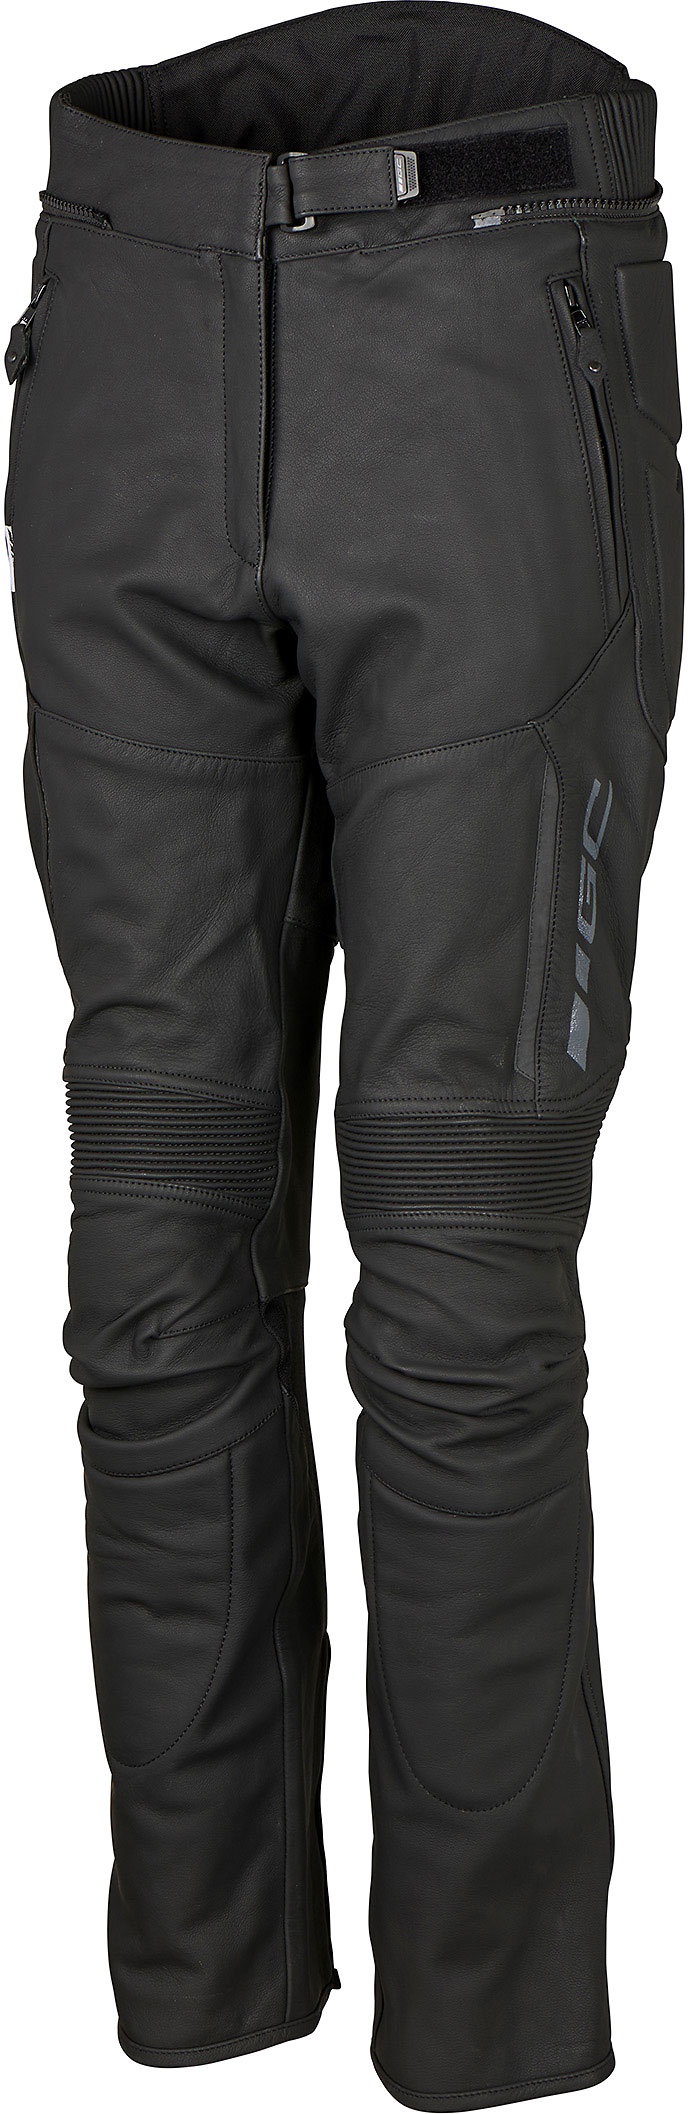 GC Bikewear Sienna, pantalon en cuir pour femmes - Noir - 46